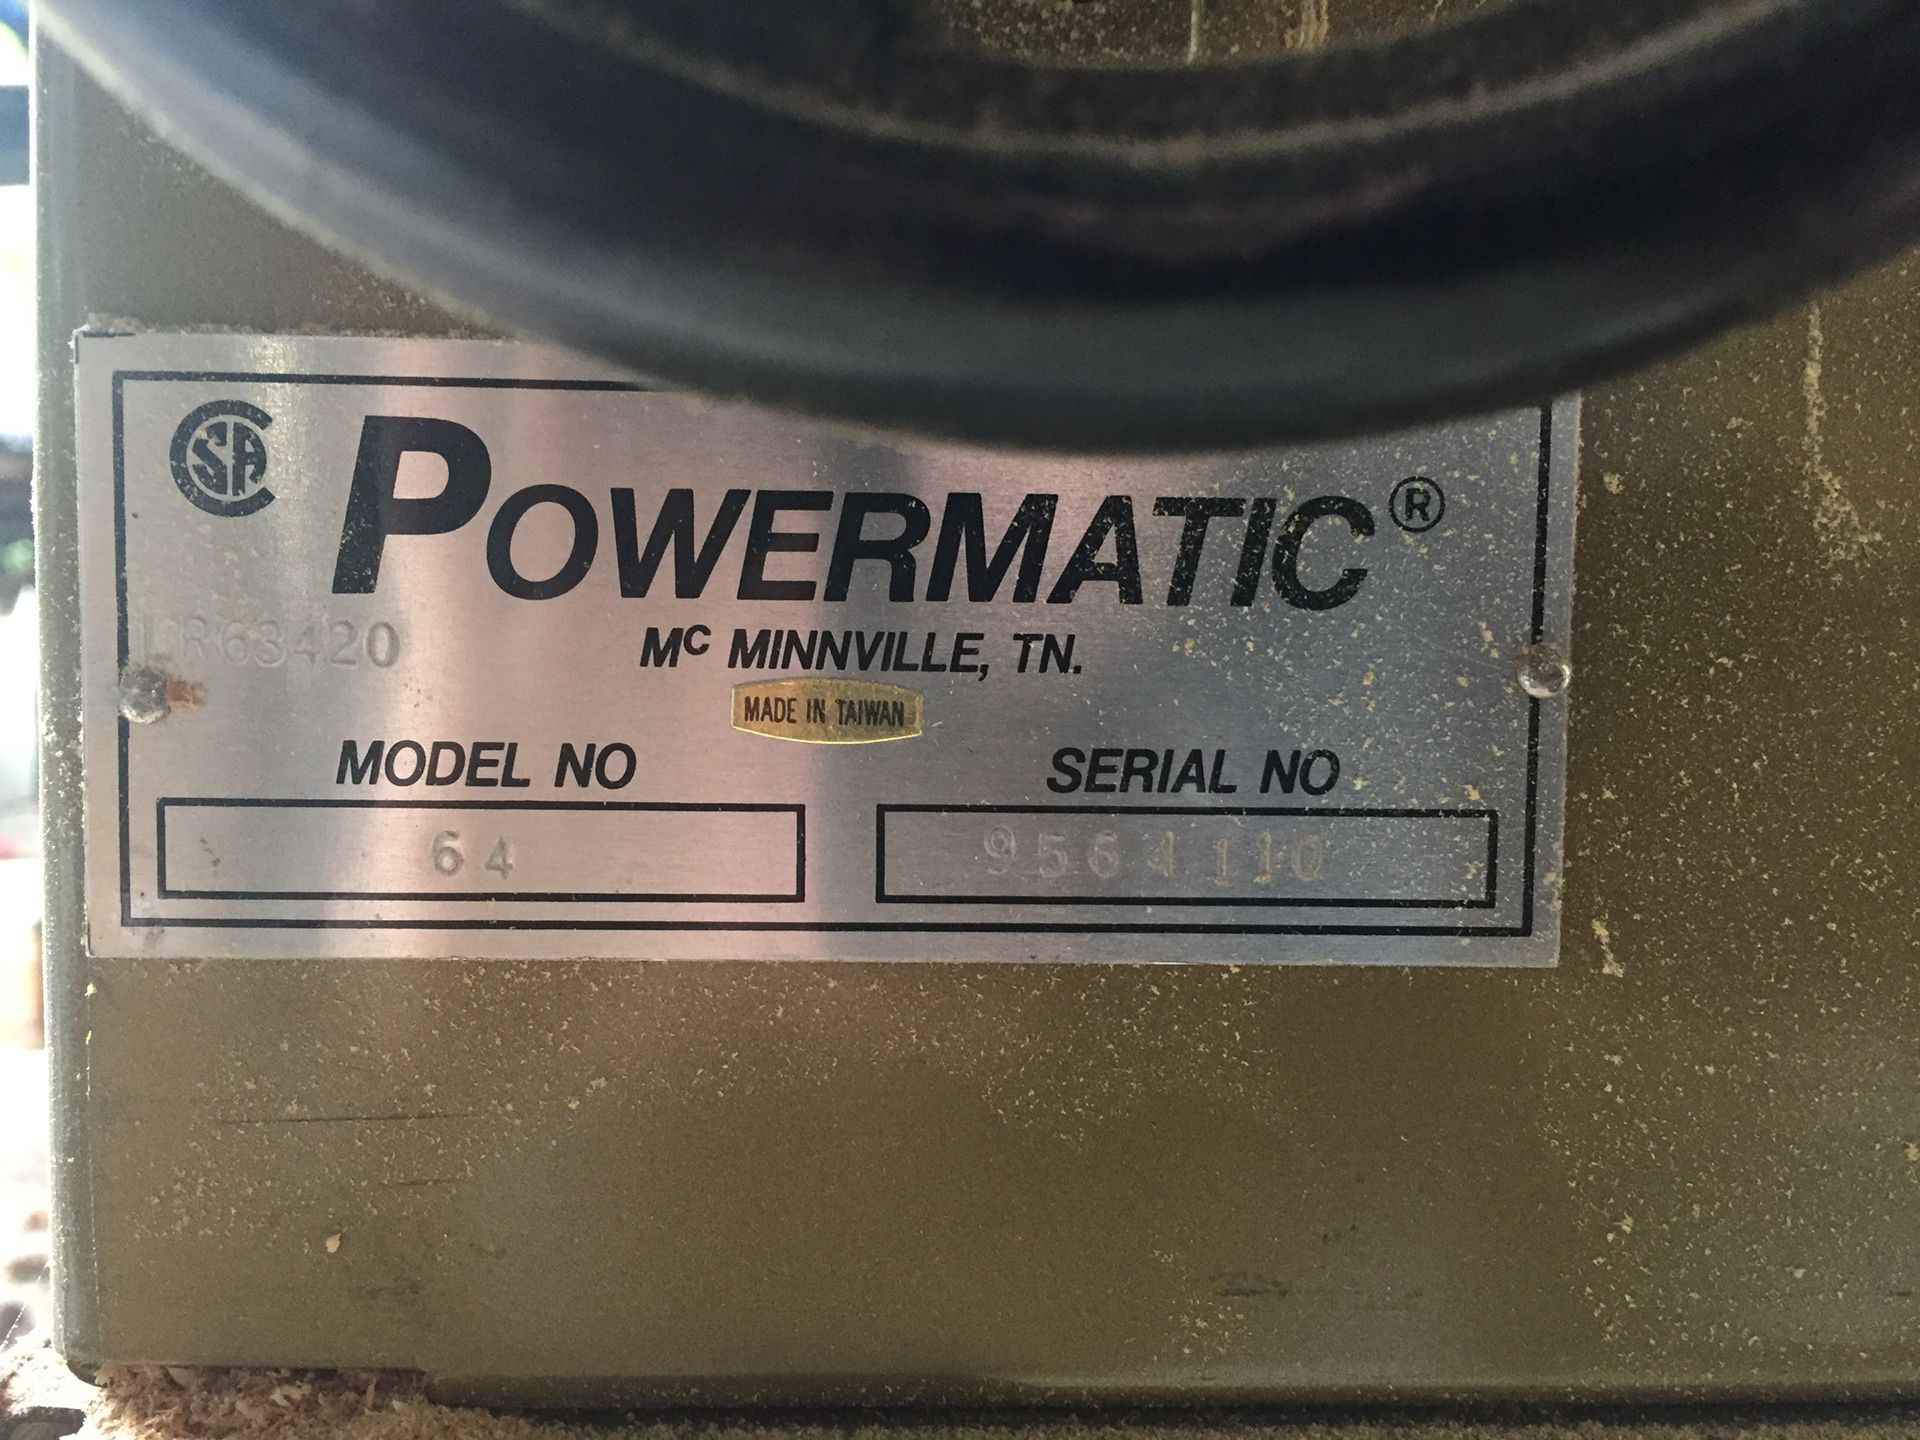 Powermatic model 64 with 1-1/2HP motor and Vega fence